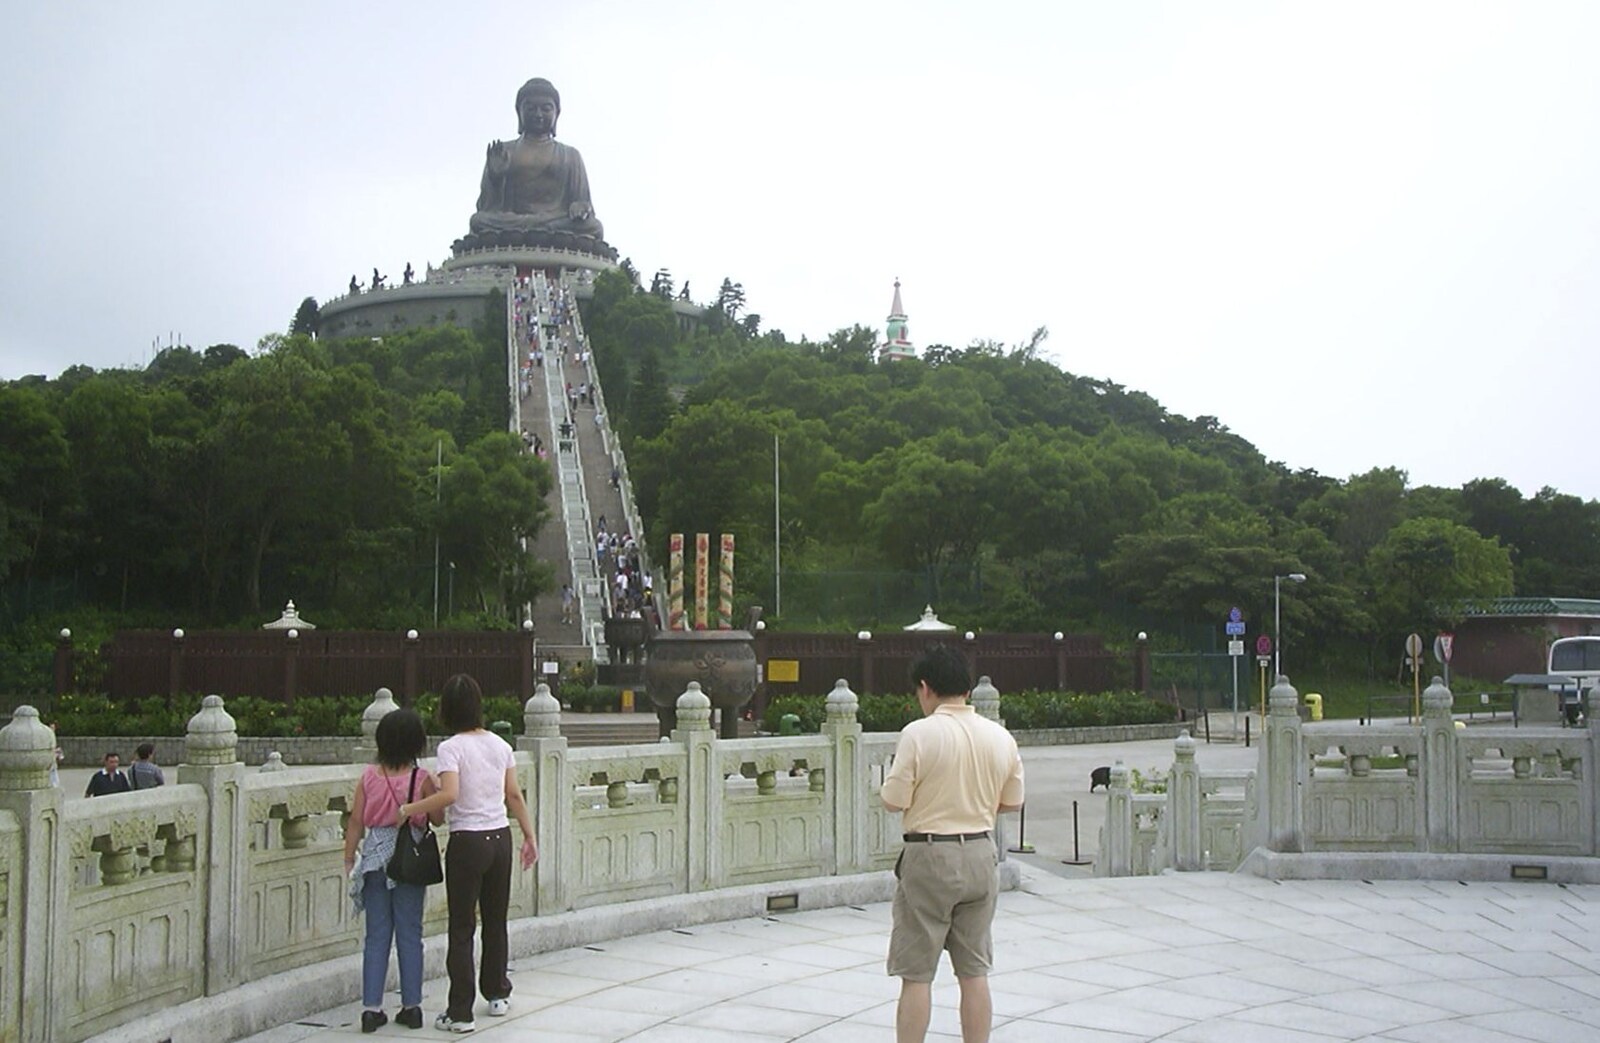 Lantau Island and the Po Lin Monastery, Hong Kong, China - 14th August 2001: The long steps up to the Buddha